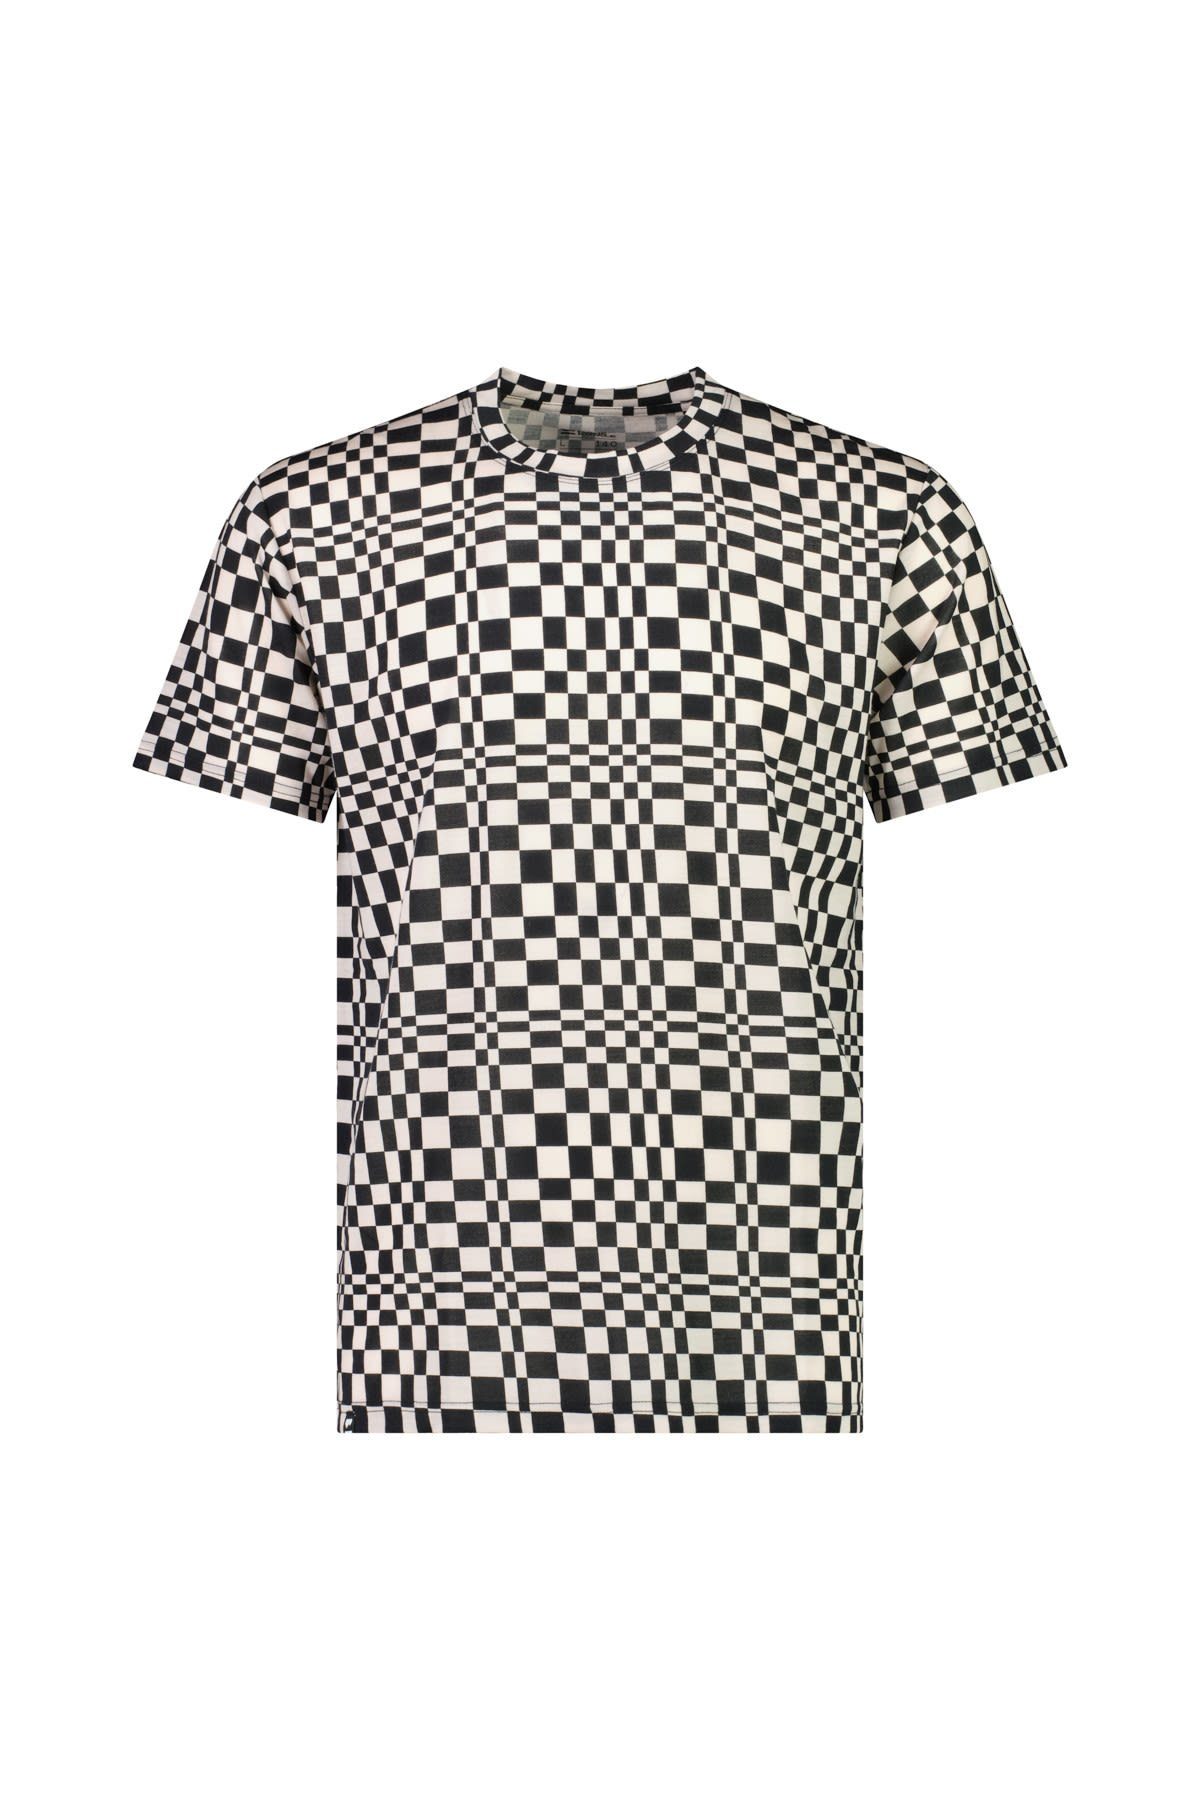 Mons Royale M T-Shirt Print Checkers Royale Herren Icon Mons T-shirt